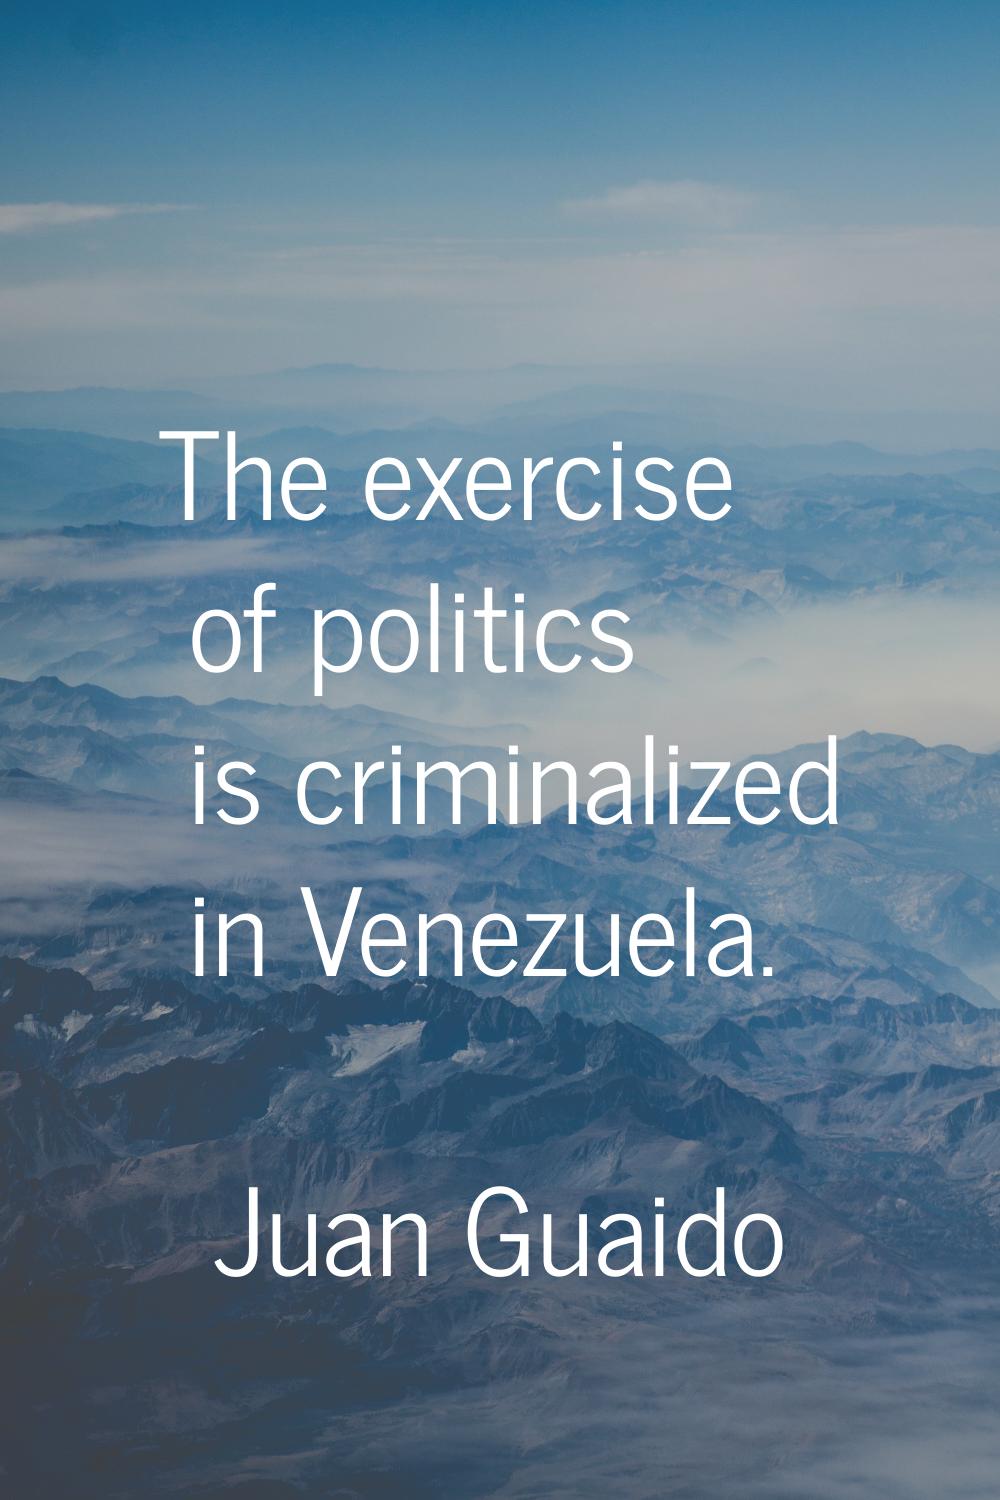 The exercise of politics is criminalized in Venezuela.